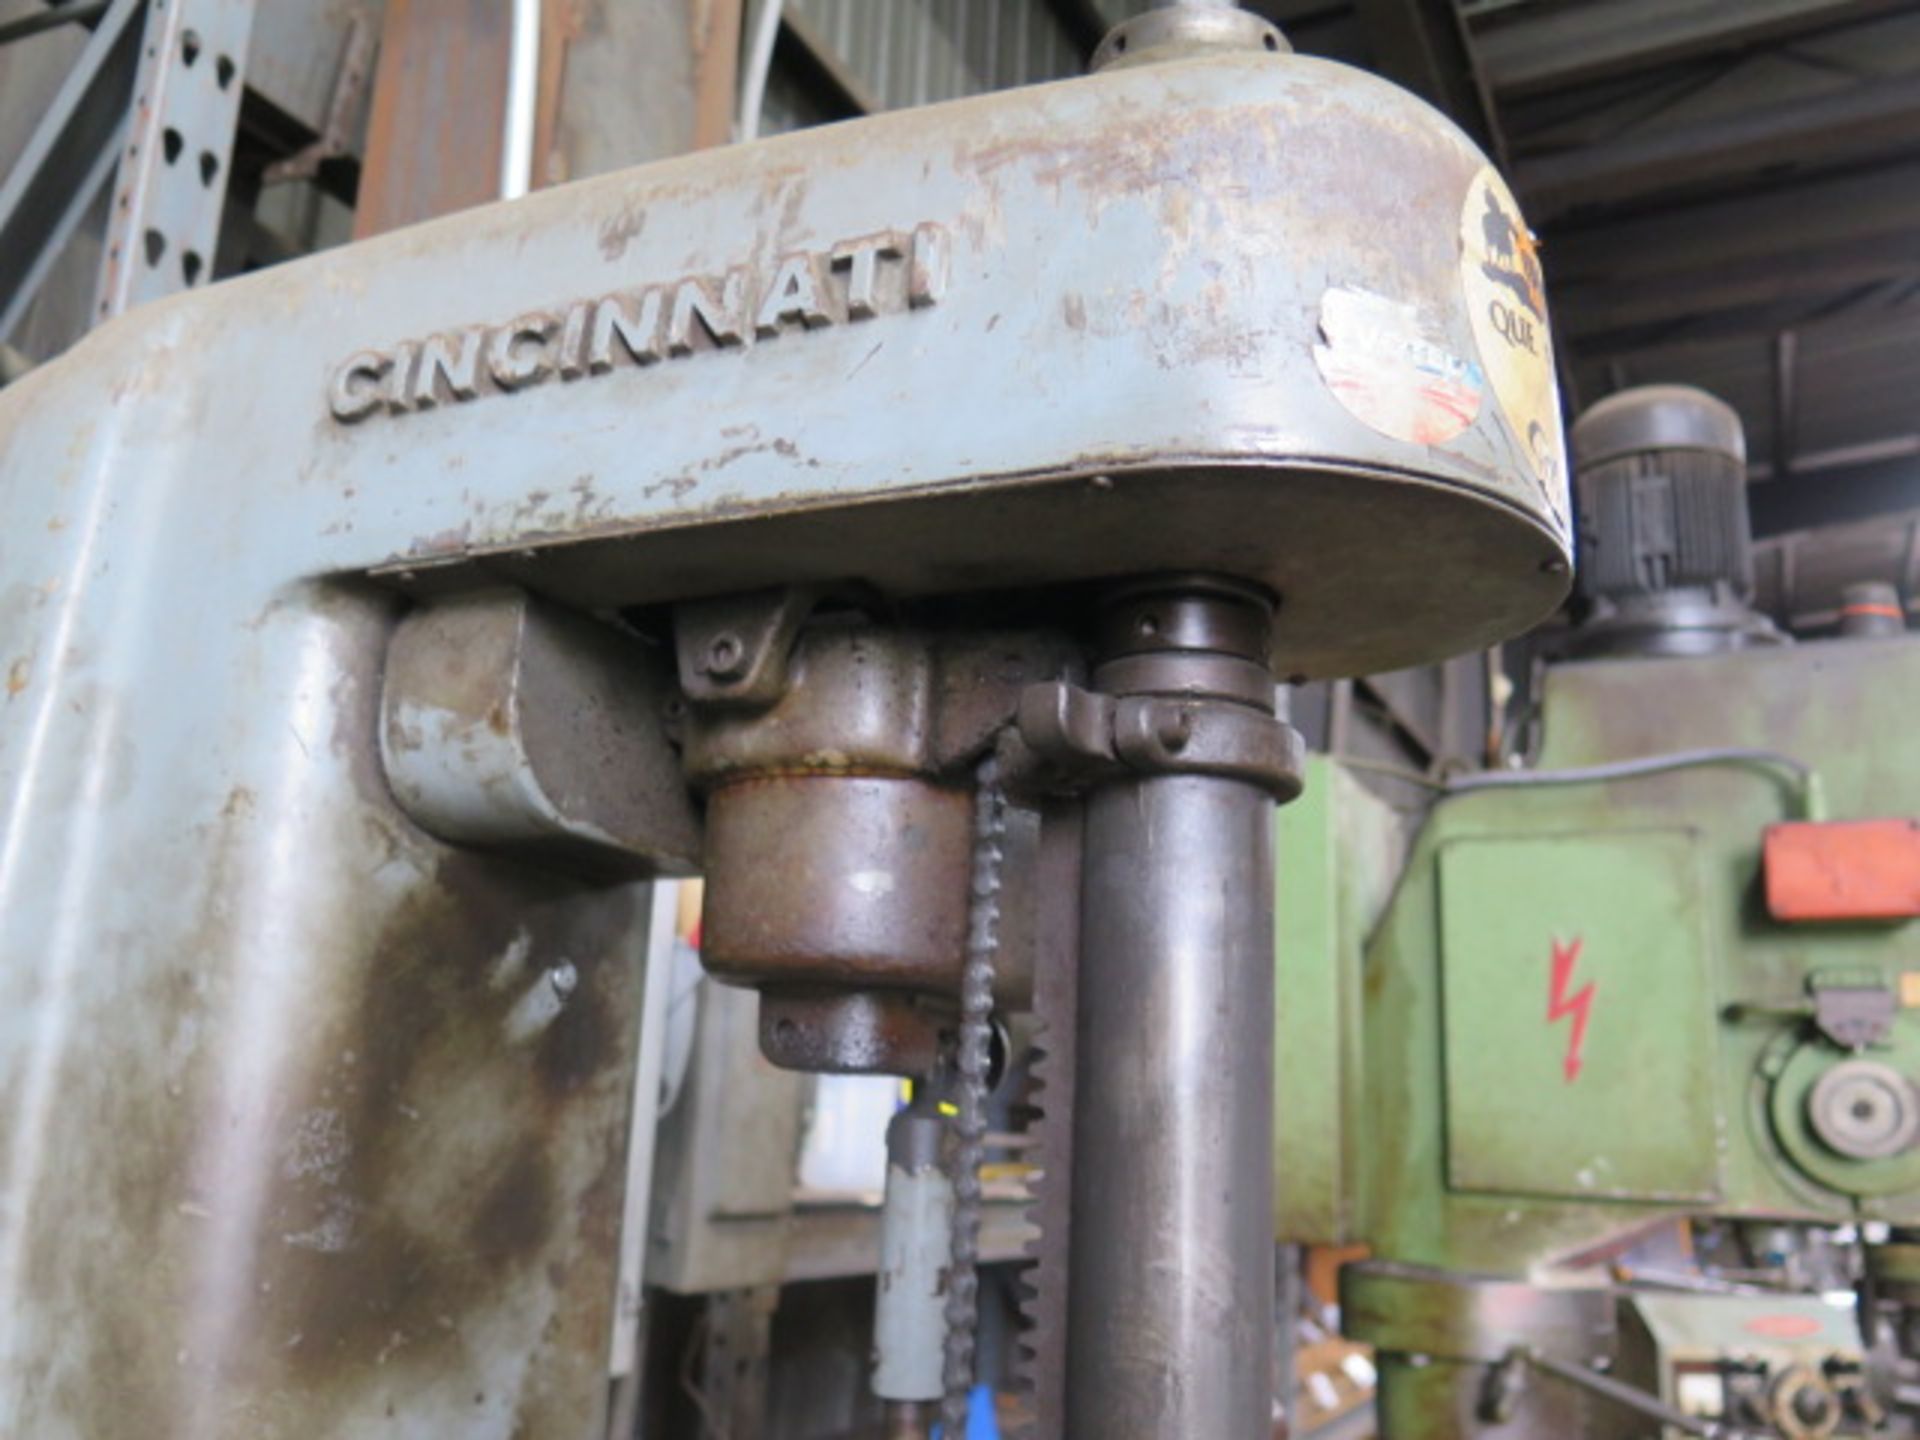 Cincinnati Deep Hole Drill Press s/n 1LF1J5J-28 (SOLD AS-IS - NO WARRANTY) - Image 6 of 10